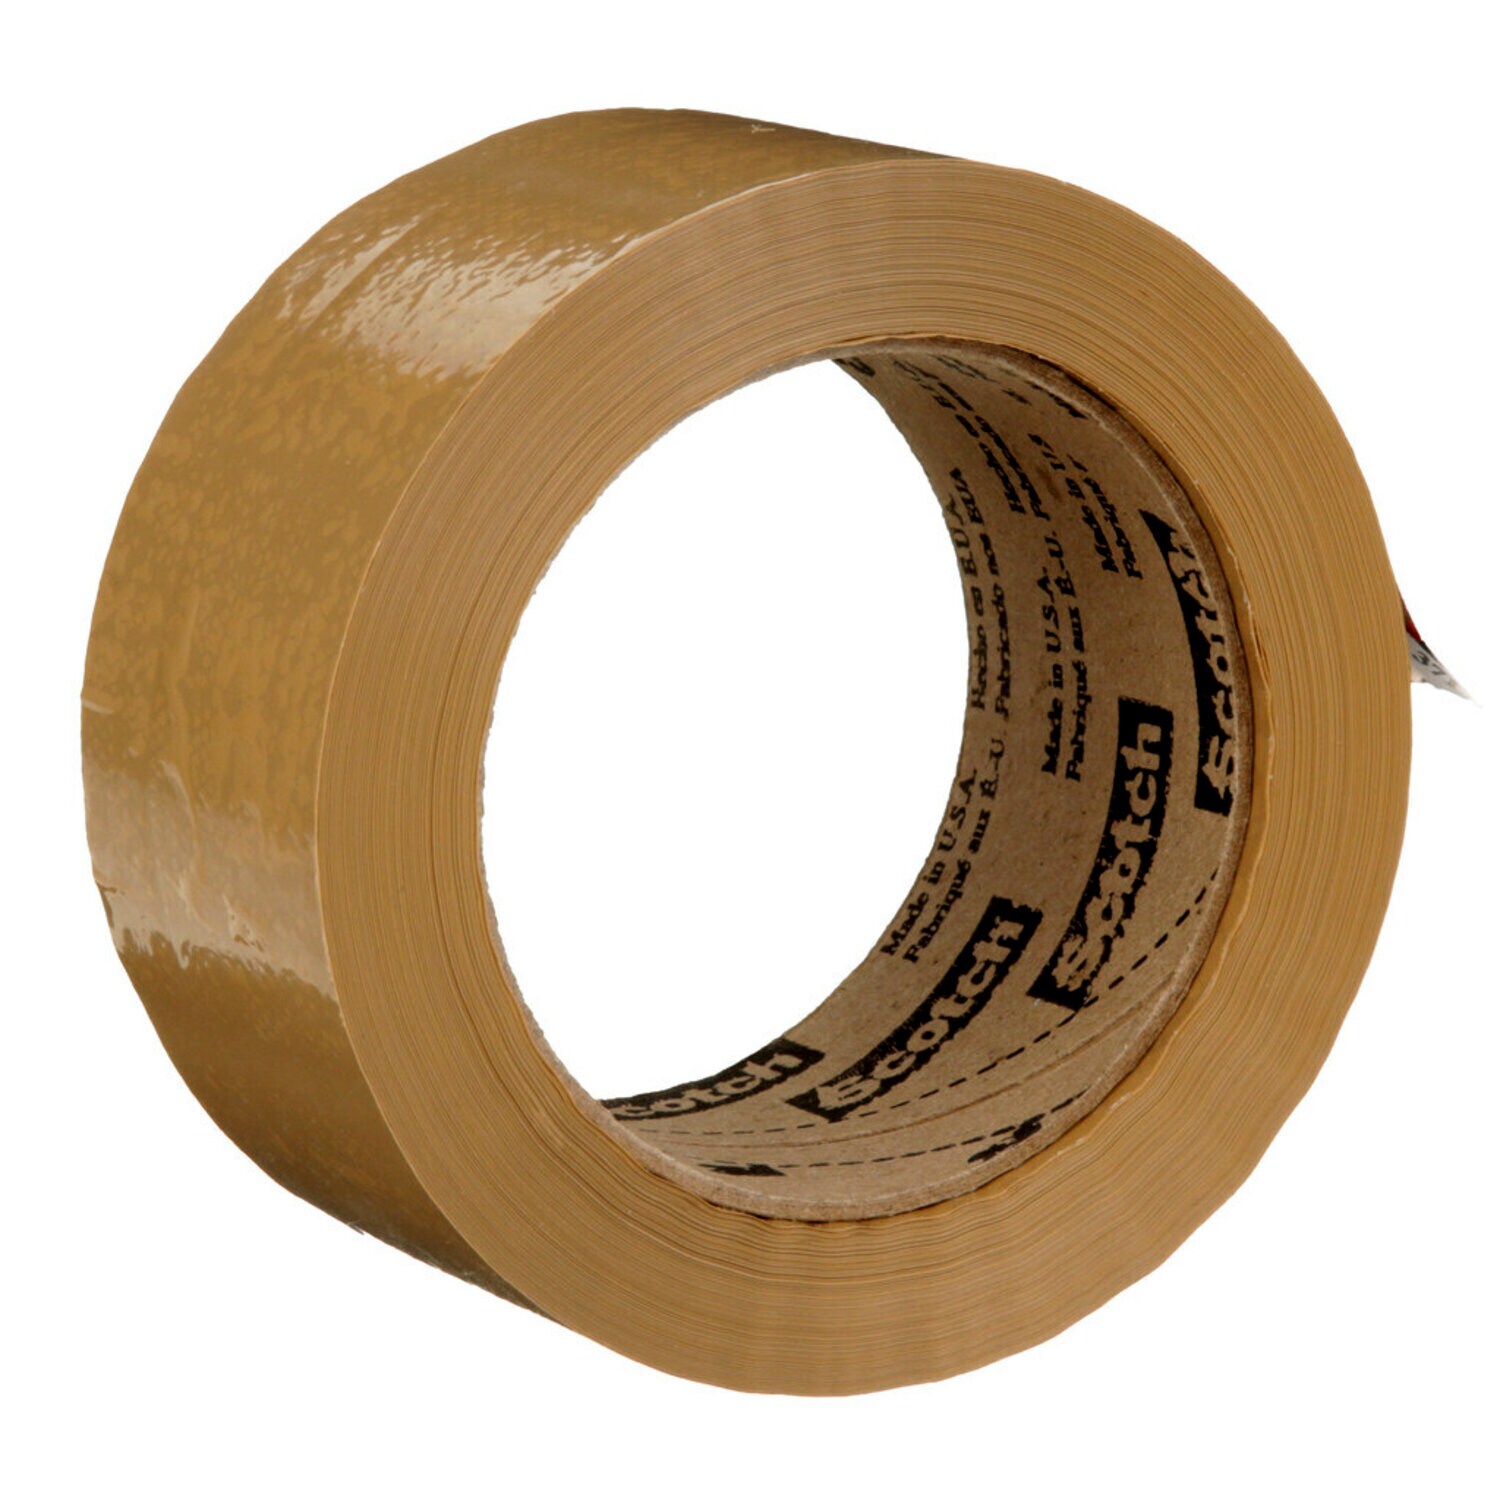 3M 600 Scotch Crystal clear tape - 19 mm x 33 m x 51 µm - Ultra clear - Box  of 12 rolls - Plastic co re